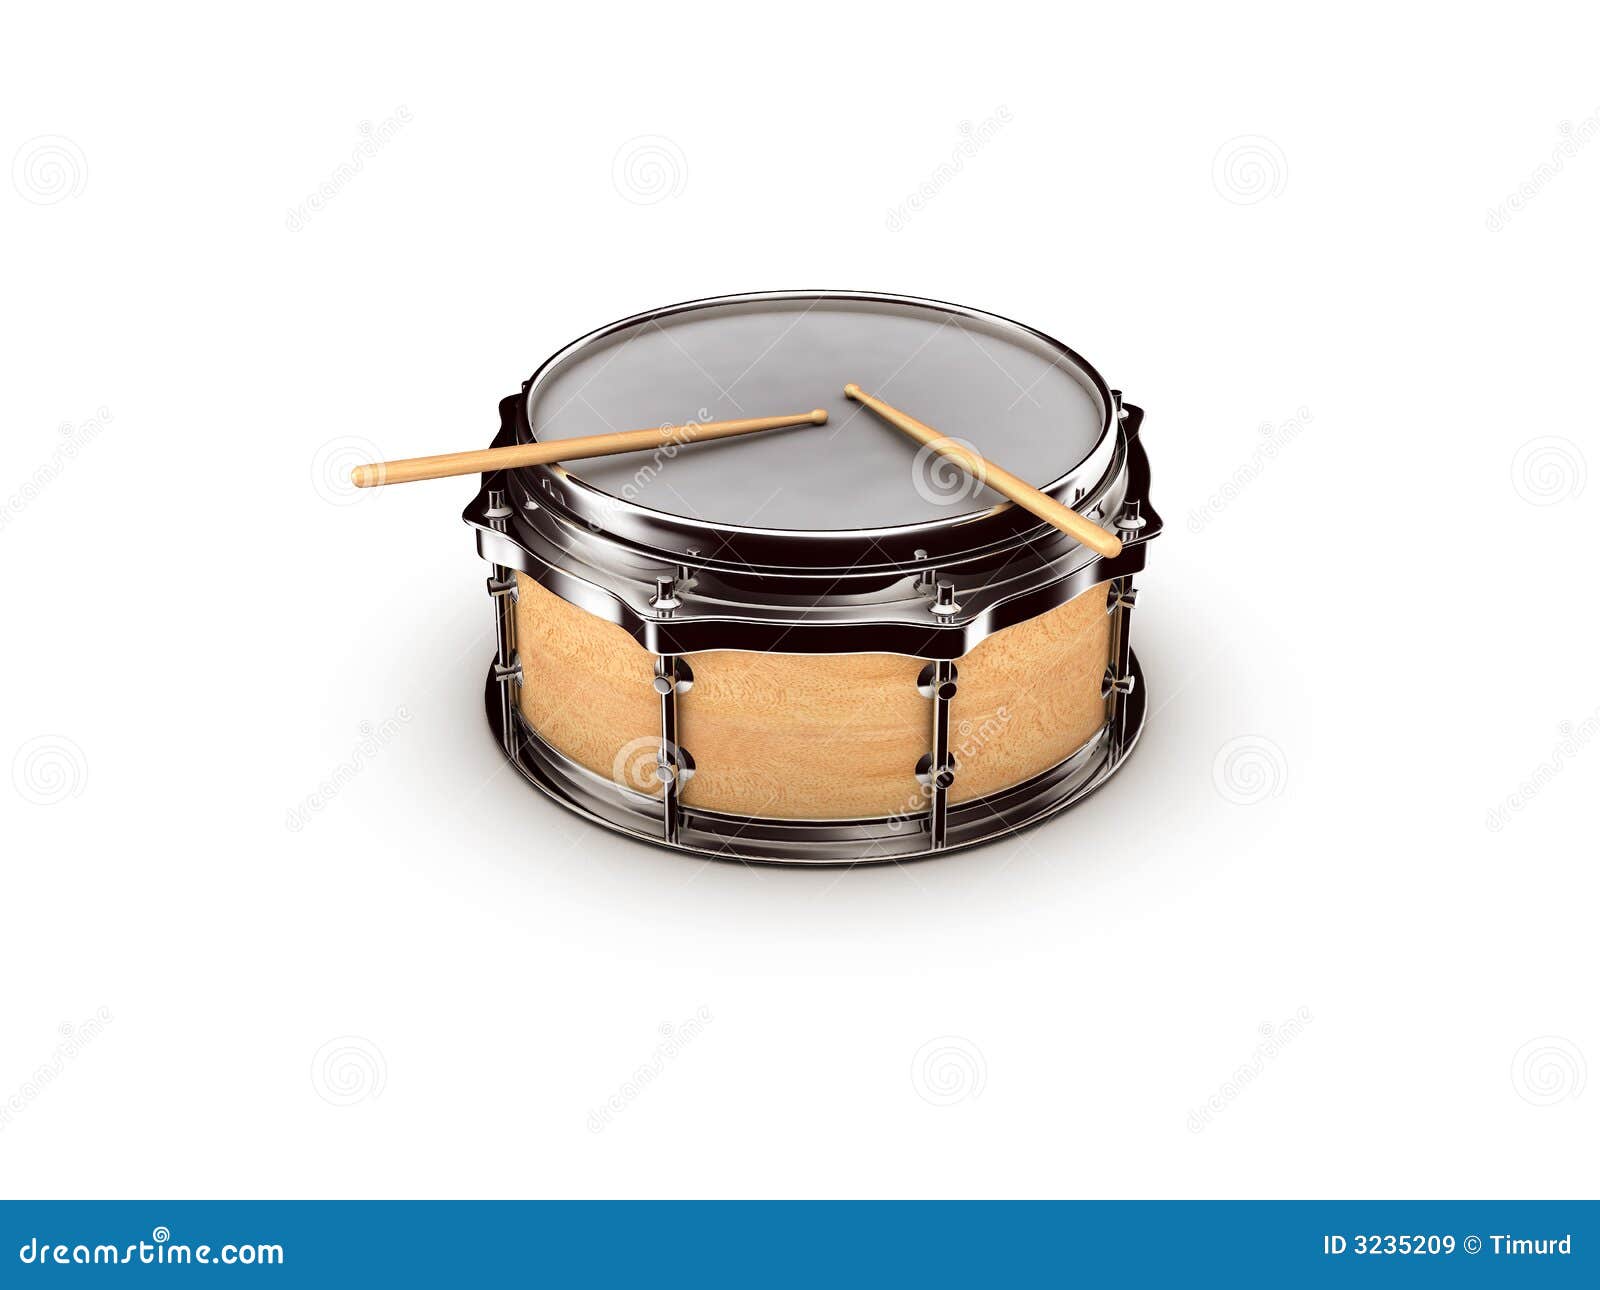 drum drumstick